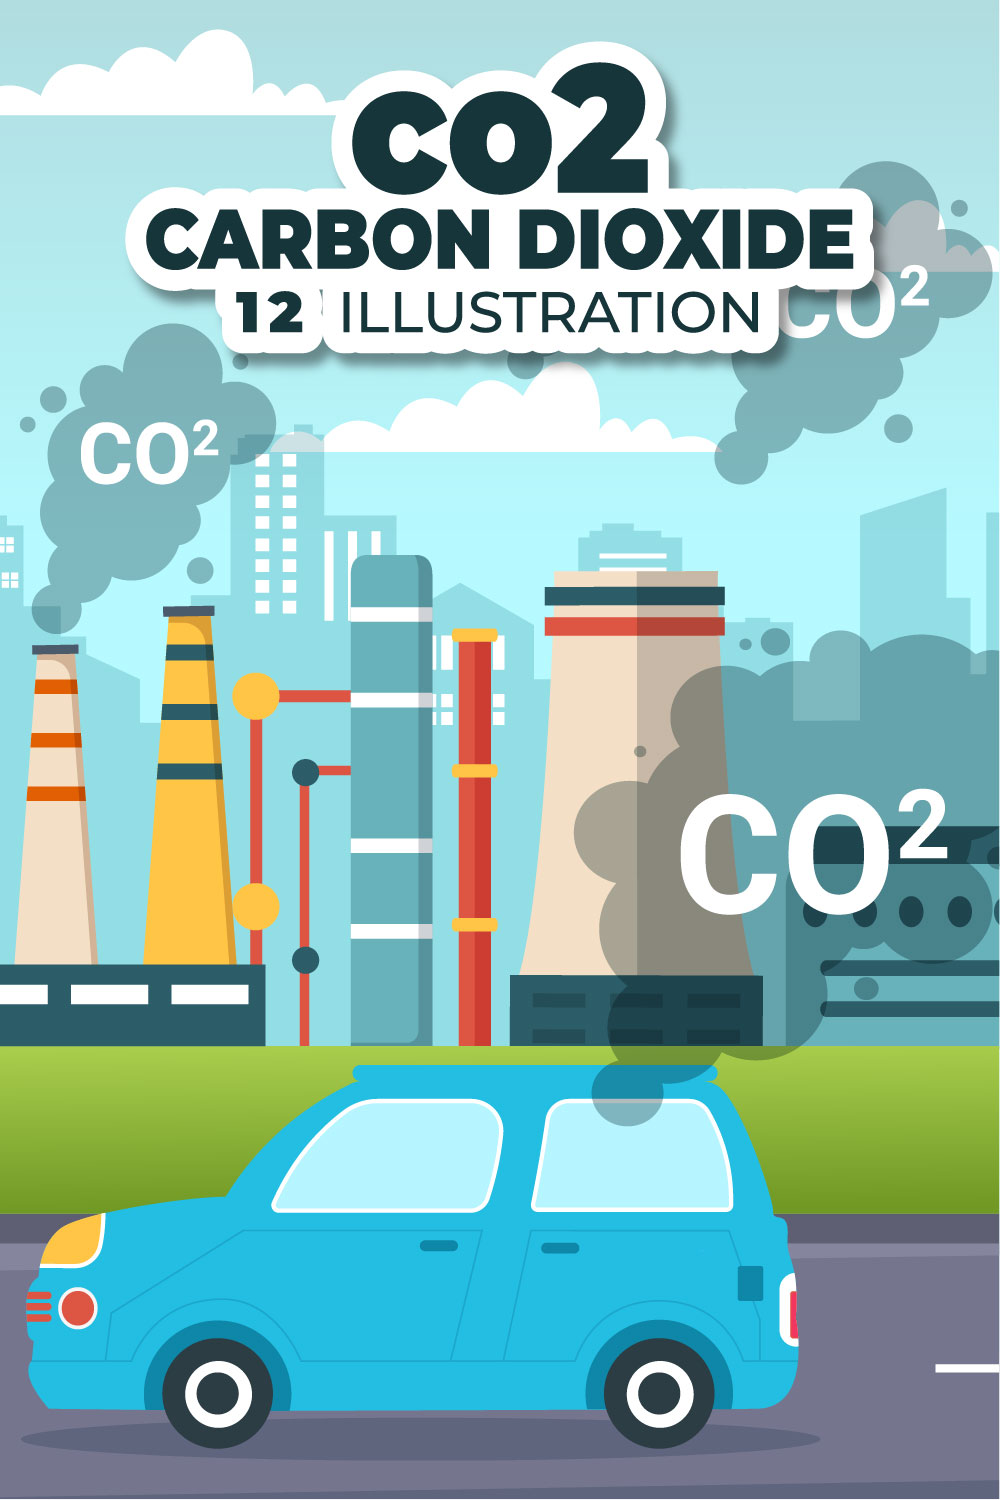 12 Carbon Dioxide or CO2 Illustration pinterest preview image.